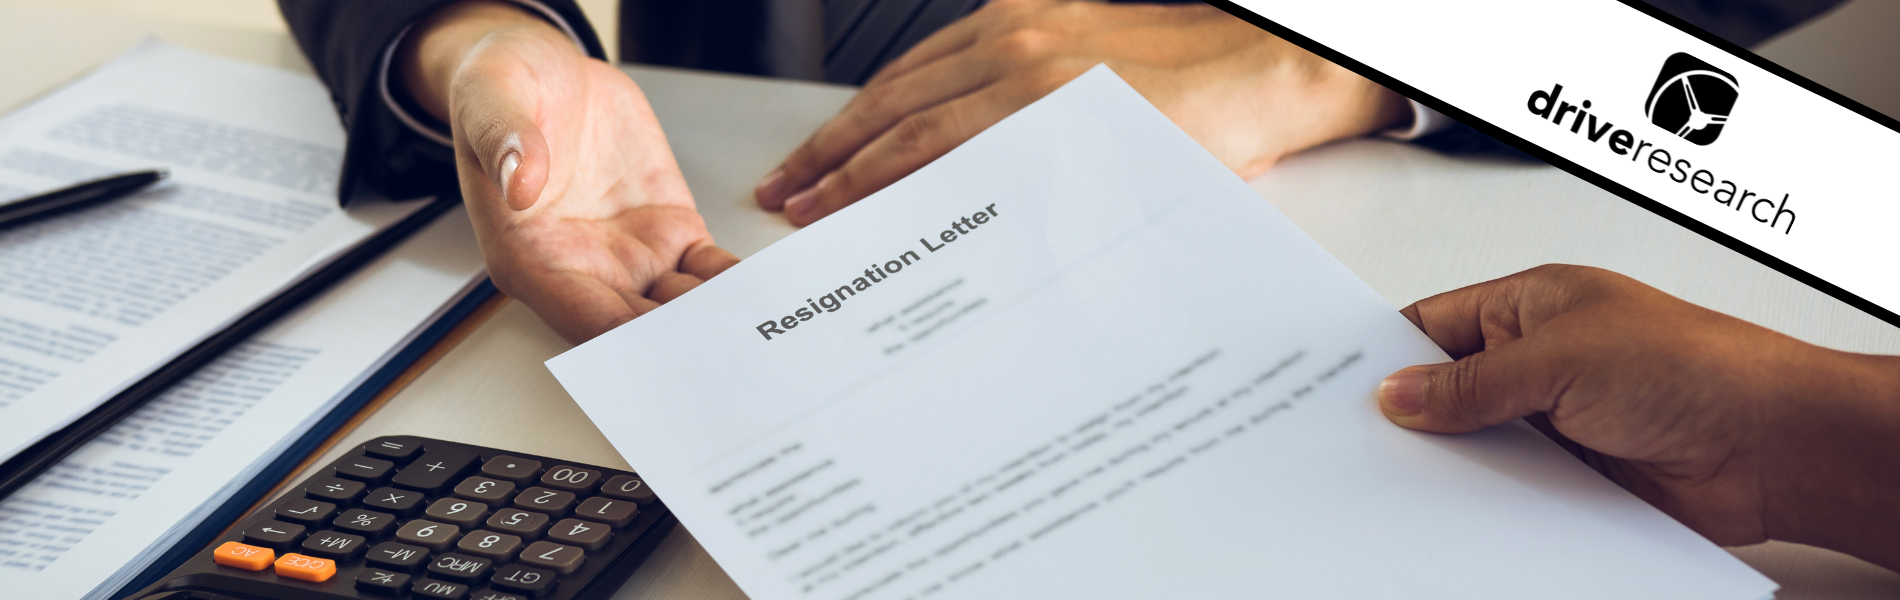 employee handing boss a resignation letter